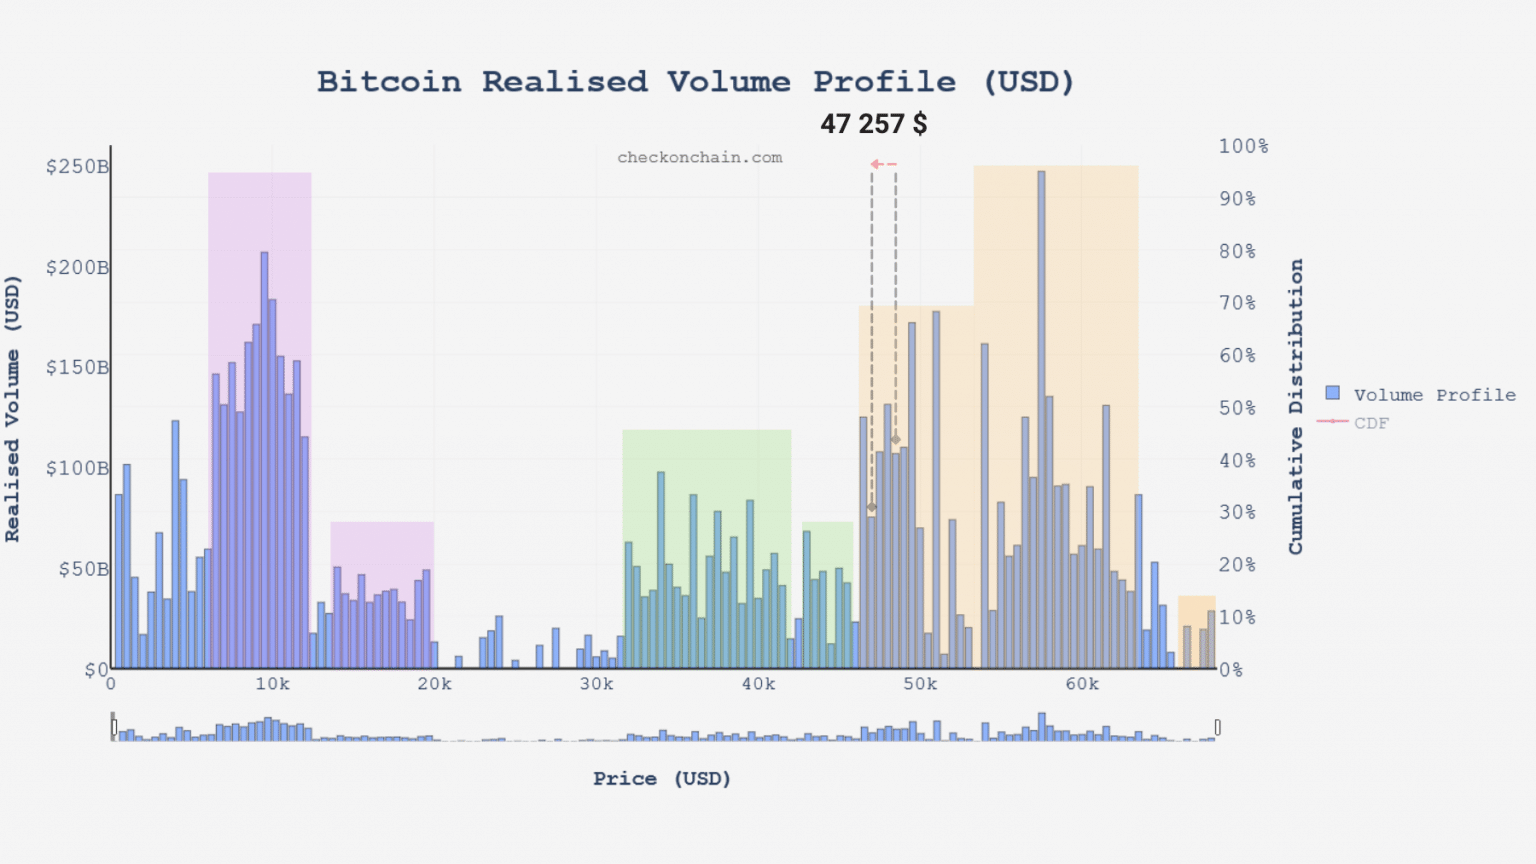 Realized Volume Chart of Bitcoin (BTC) (Fonte: checkonchain.com)